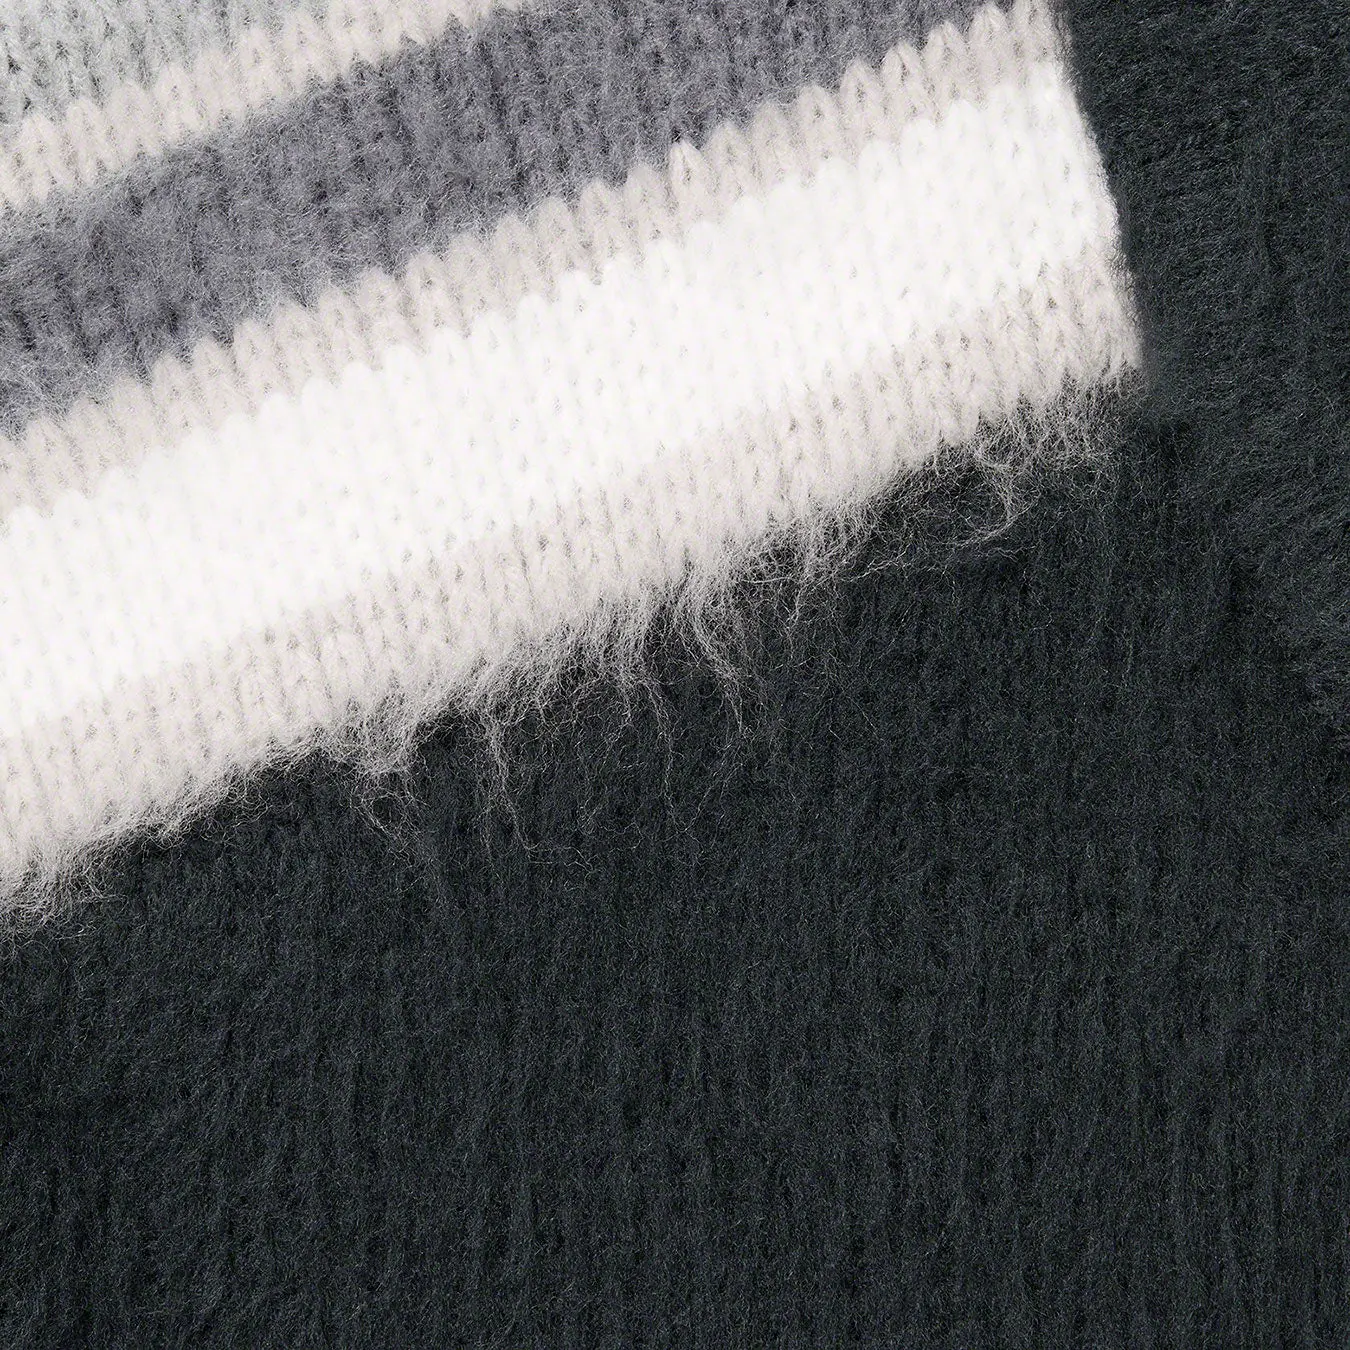 Supreme Sleeve Stripe Zip Up Sweater